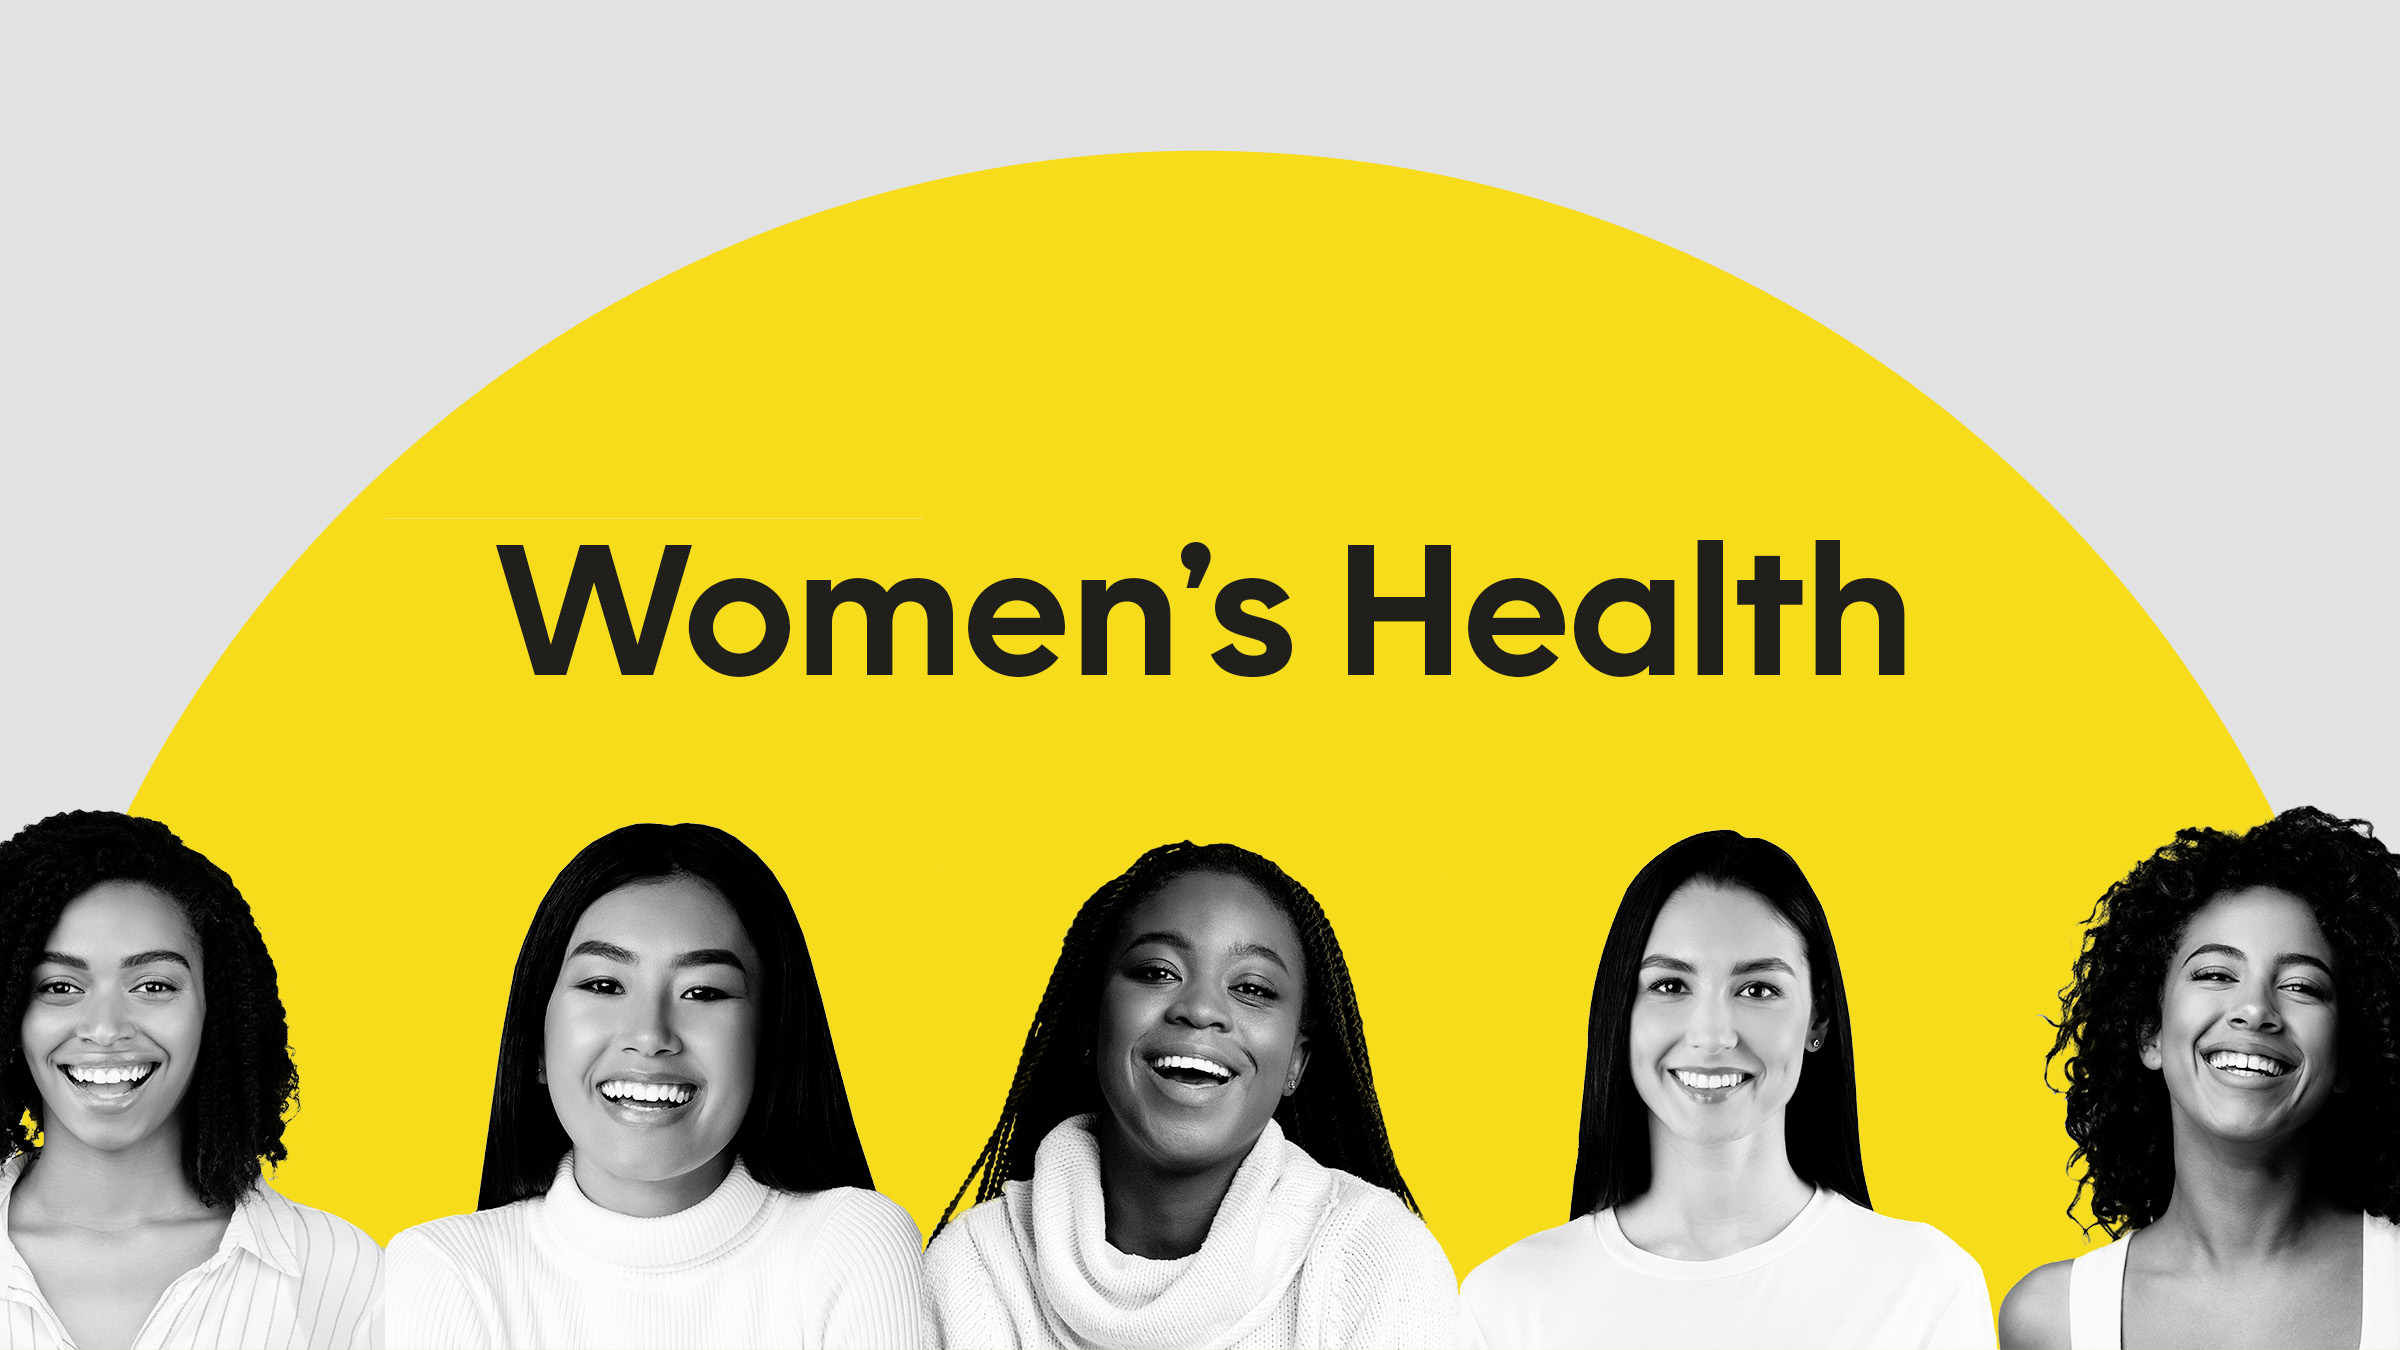 Women: womens health portrait graphic 1305354340